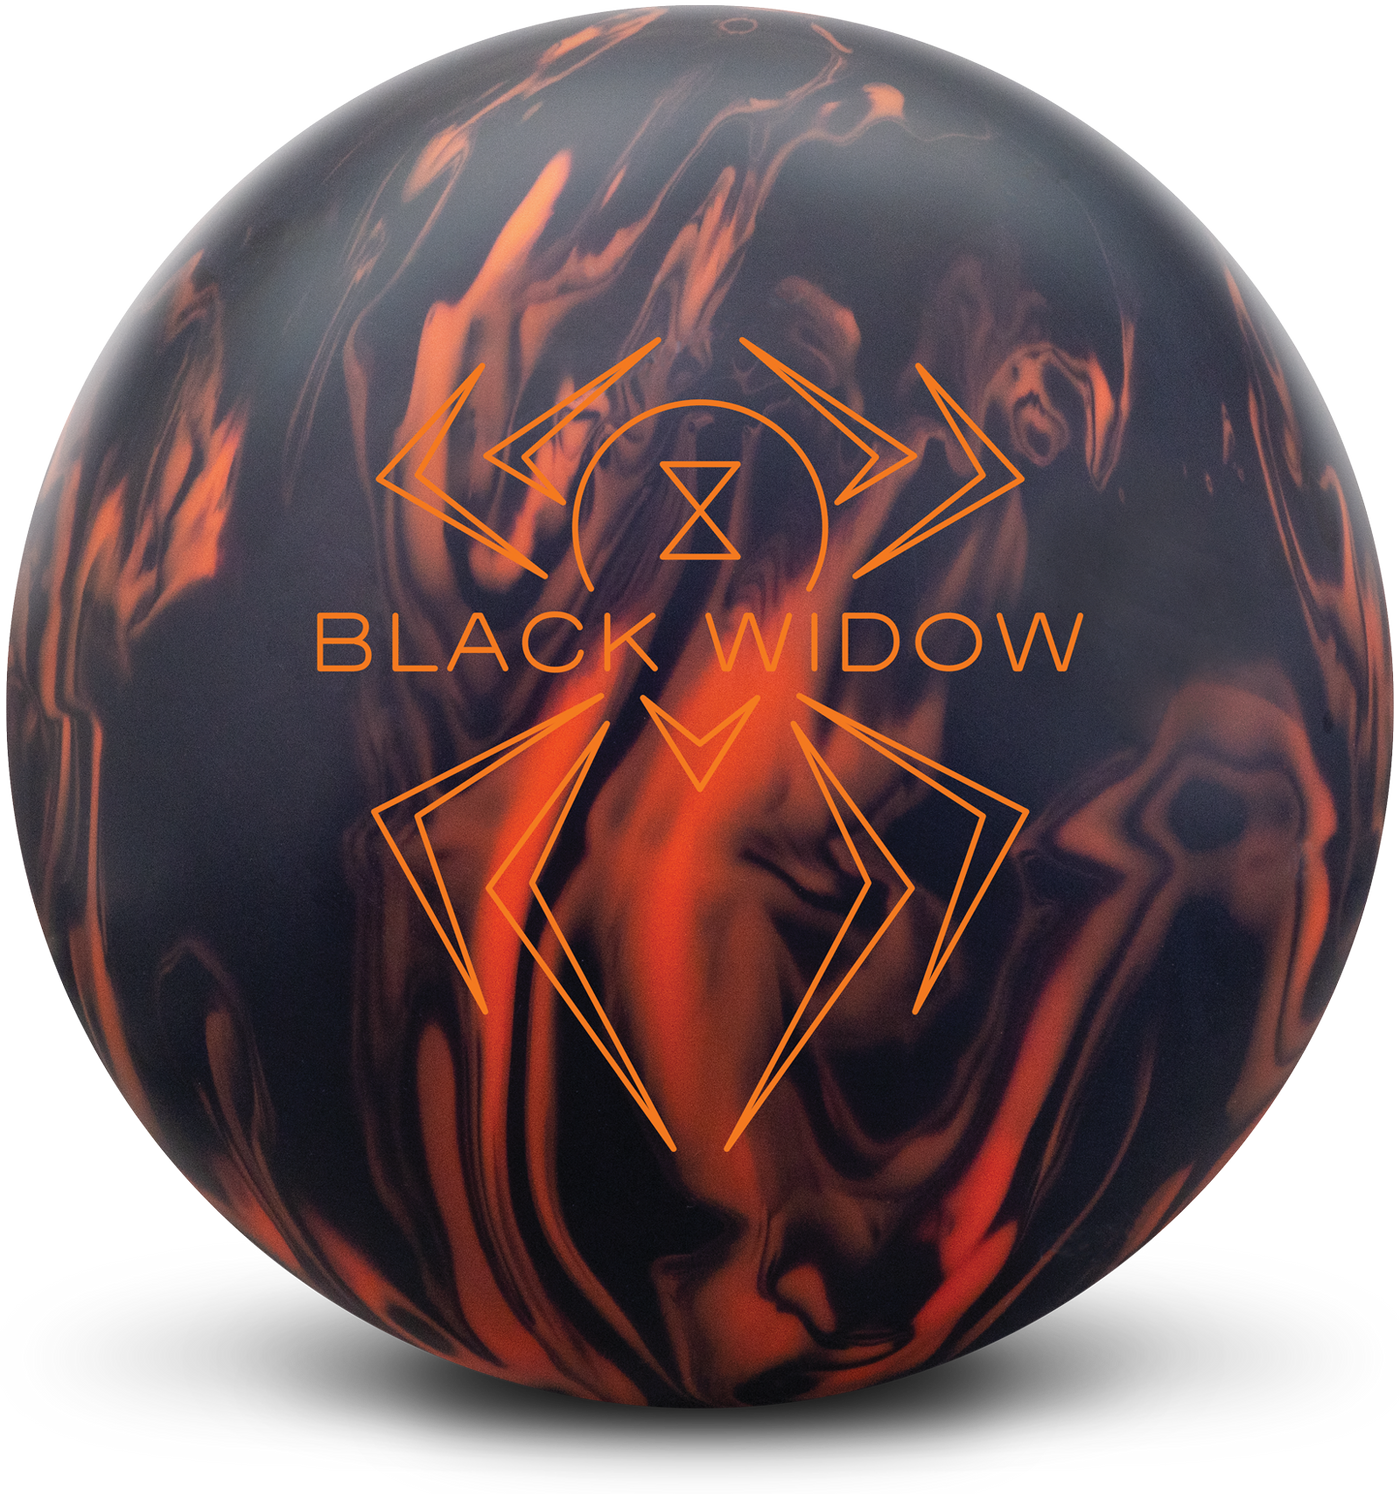 Black Widow 3.0 bowling ball